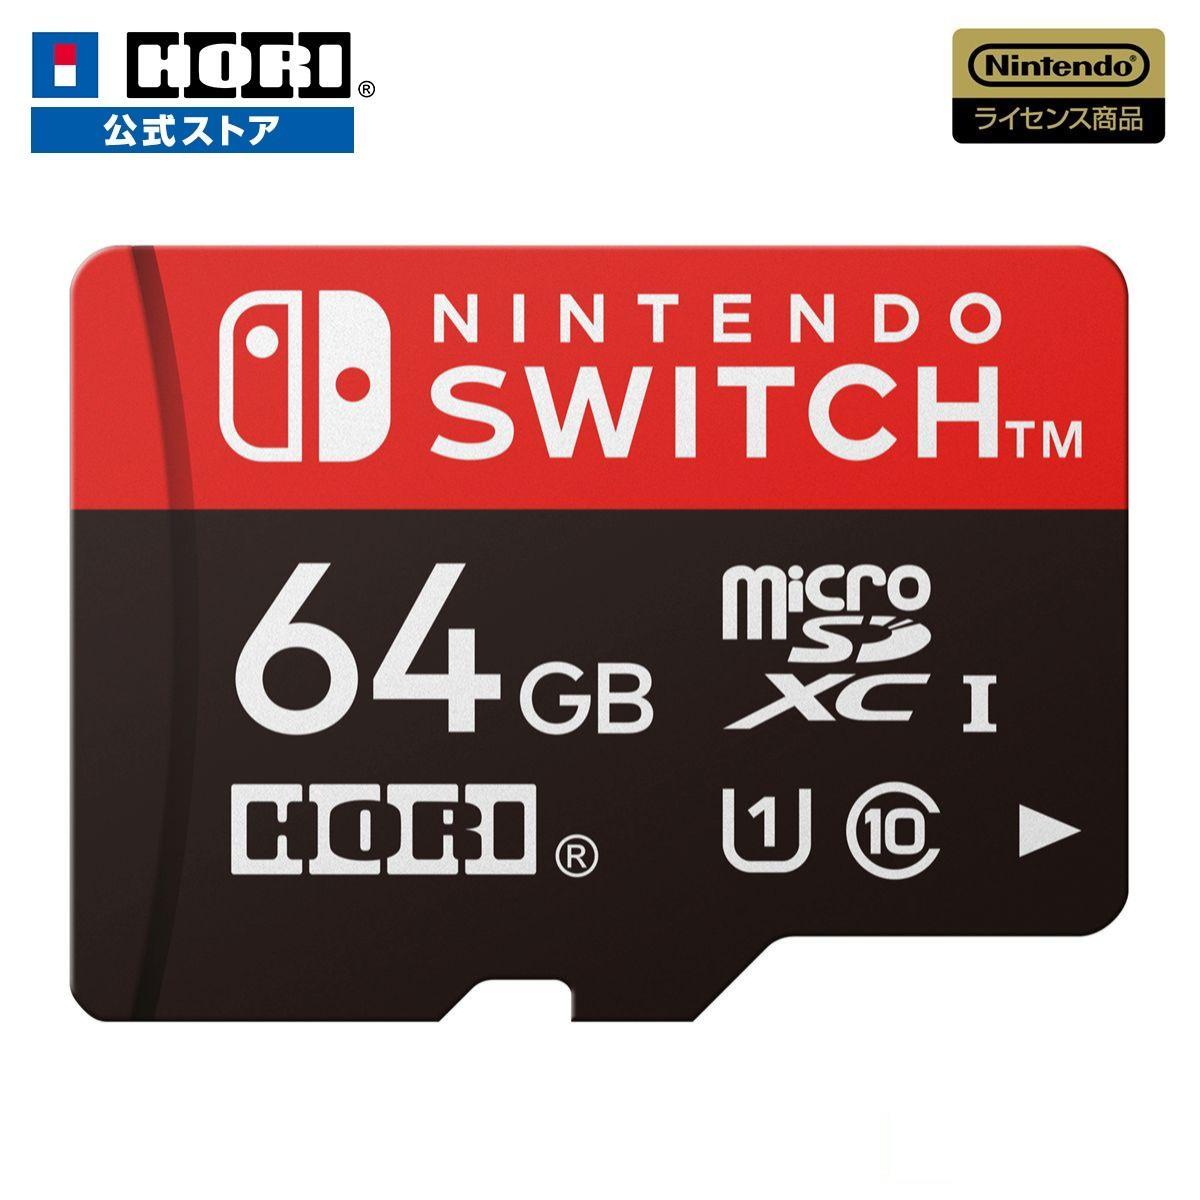 microSDカード64GB for Nintendo Switch NSW-046 NintendoSwitch 任天堂 SDカード HORI ホリ ゲーム ストレージ ダウンロード